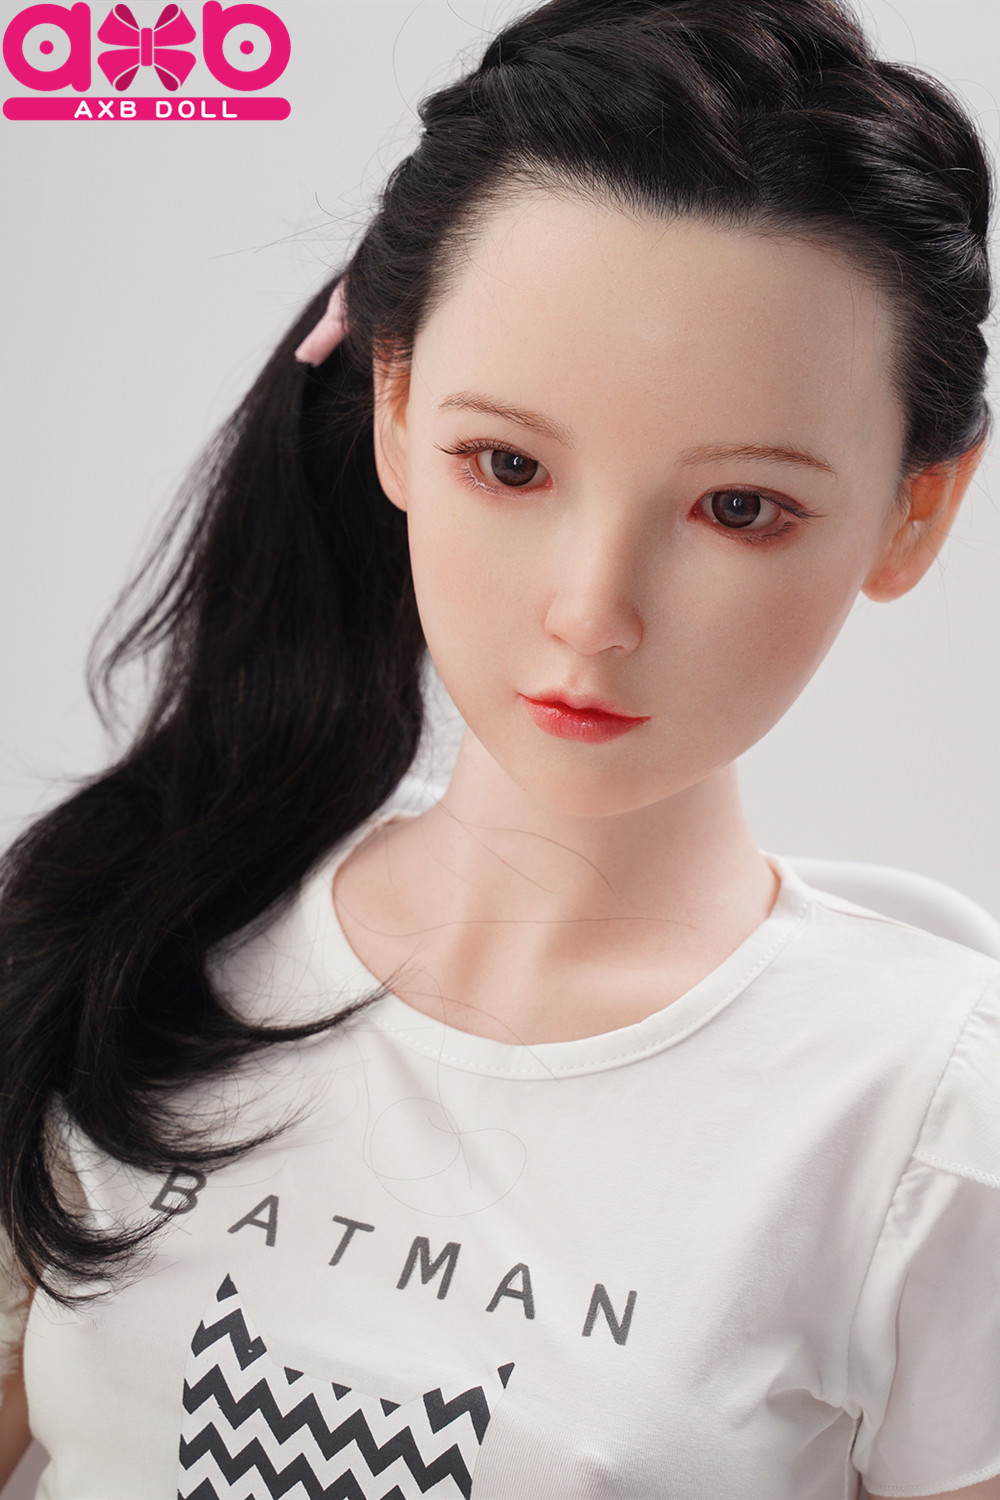 AXBDOLL 130cm G36# Head Can Choose Silicone Doll Slight defect - 画像をクリックして閉じます